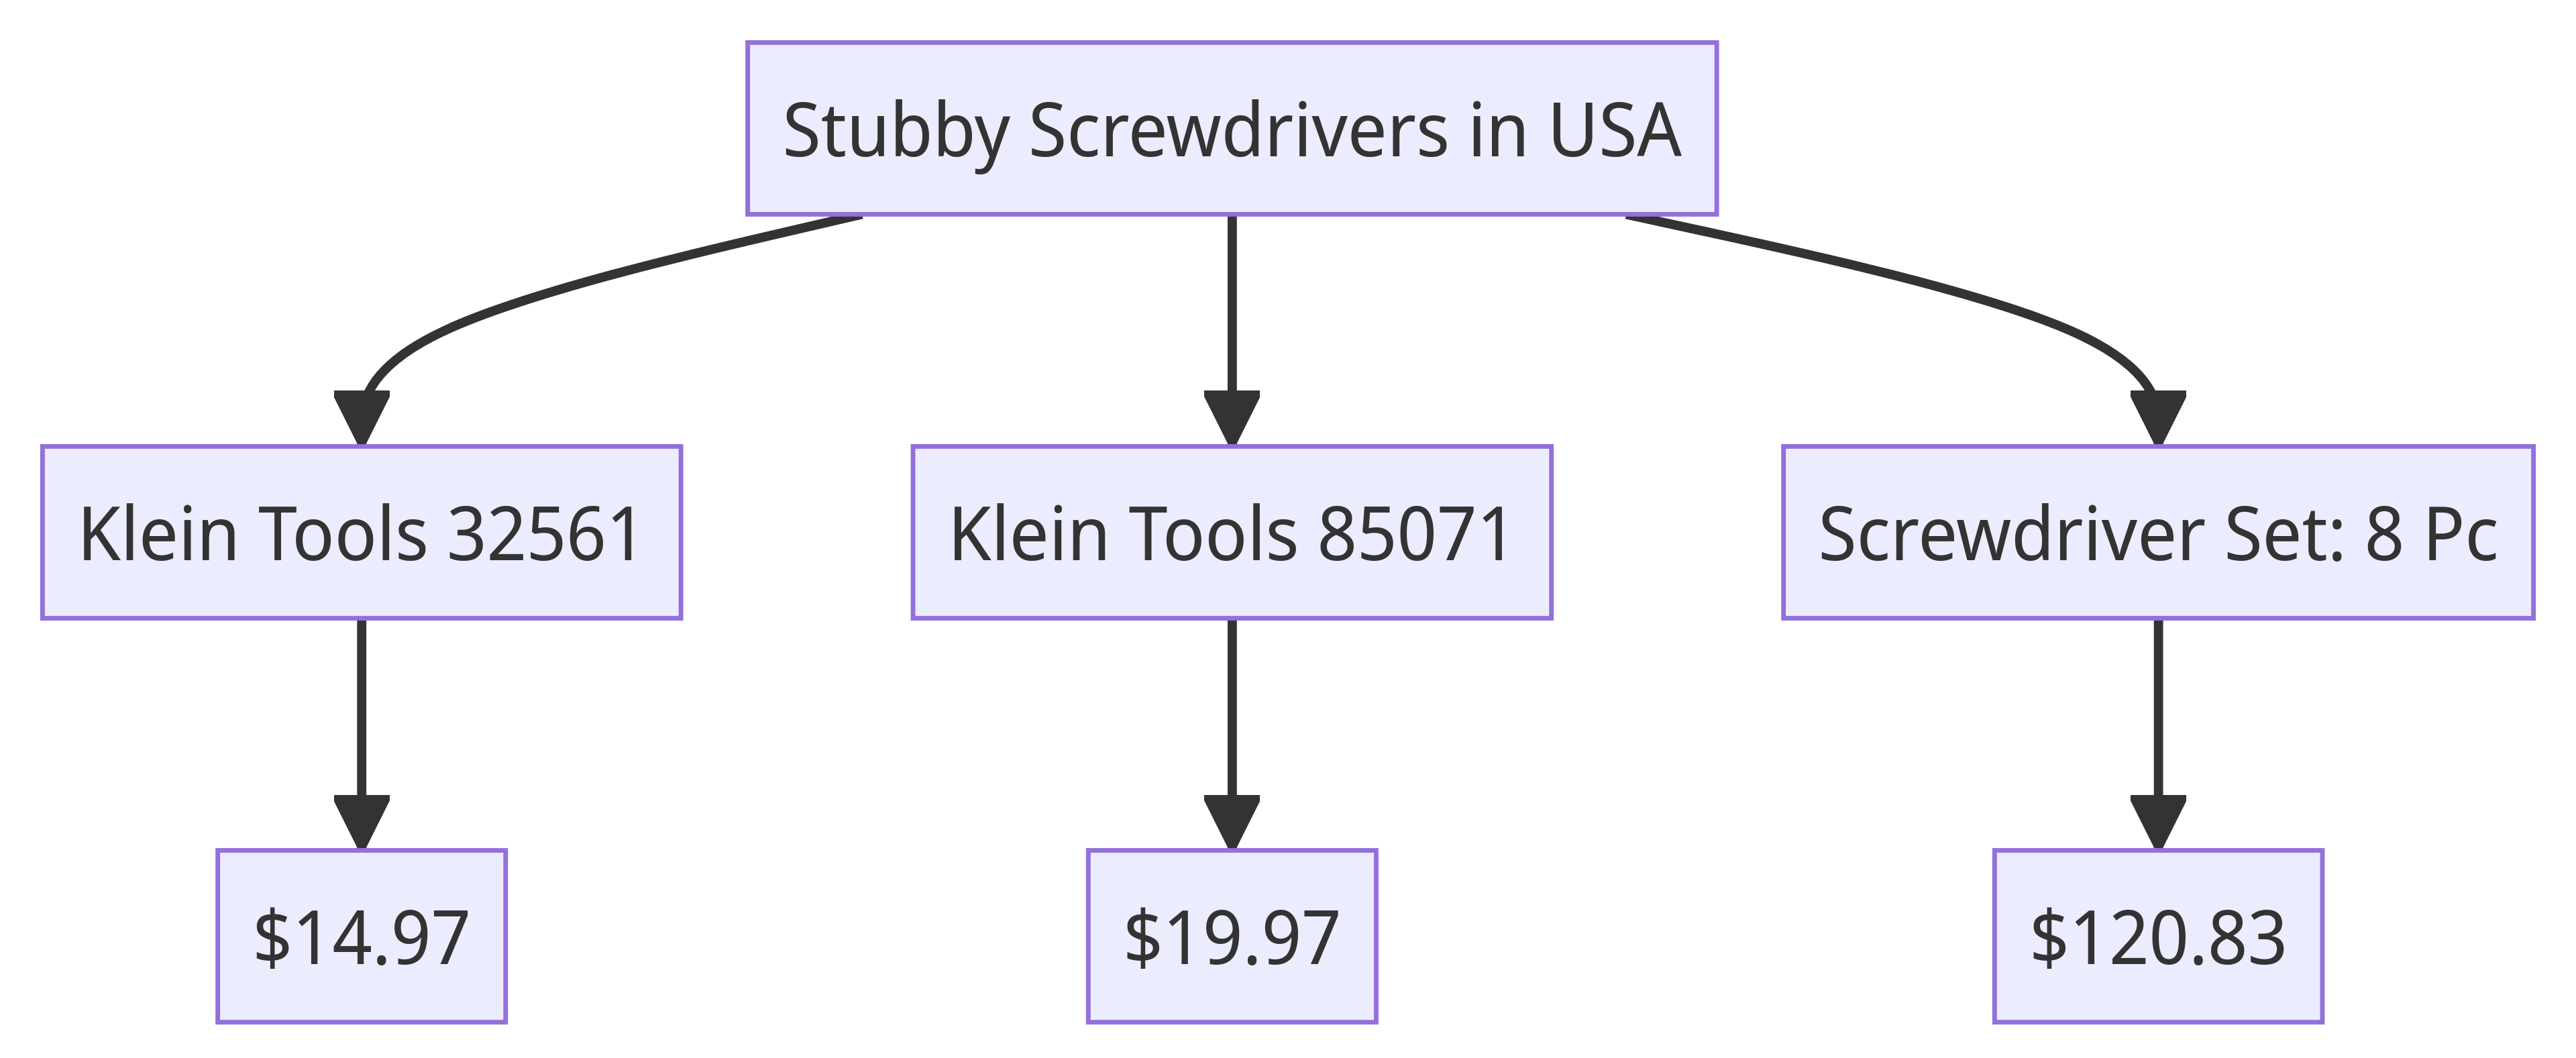 Flowchart of Stubby Screwdrivers